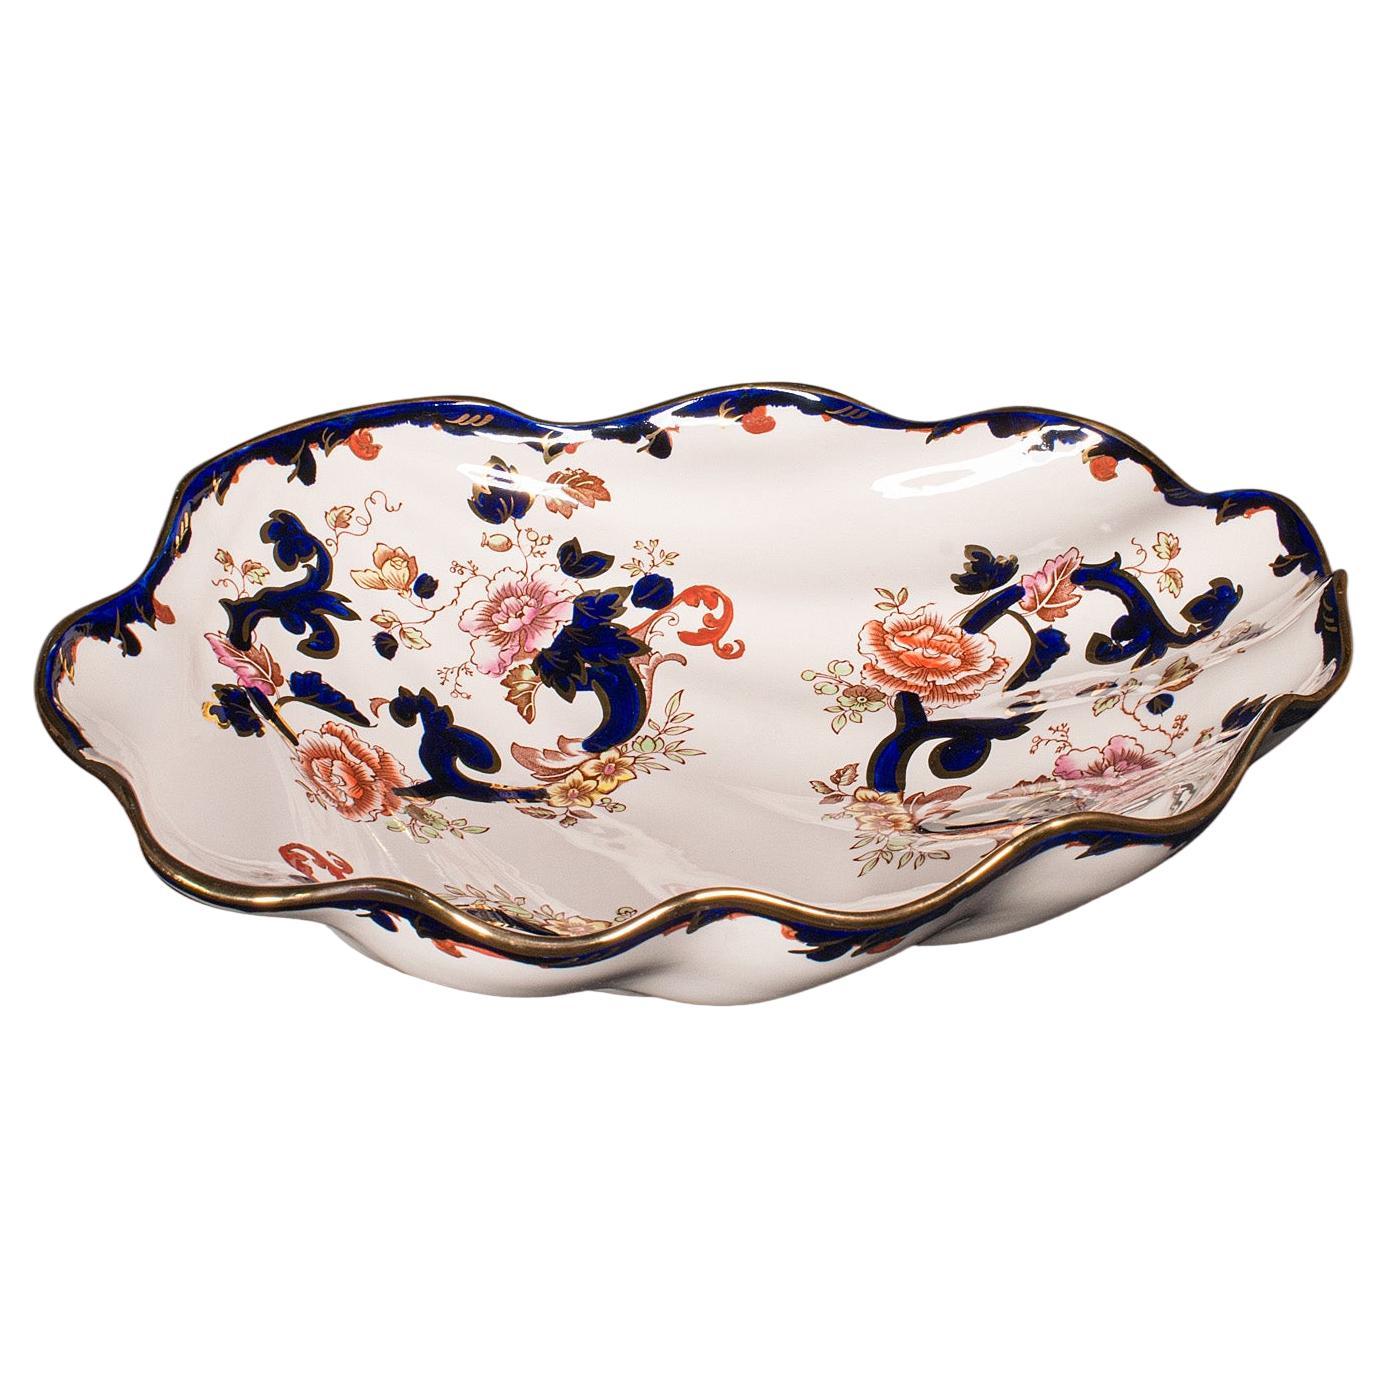 Large Vintage Shell Shaped Fruit Bowl, English Ceramic, Decorative, Serving Dish For Sale